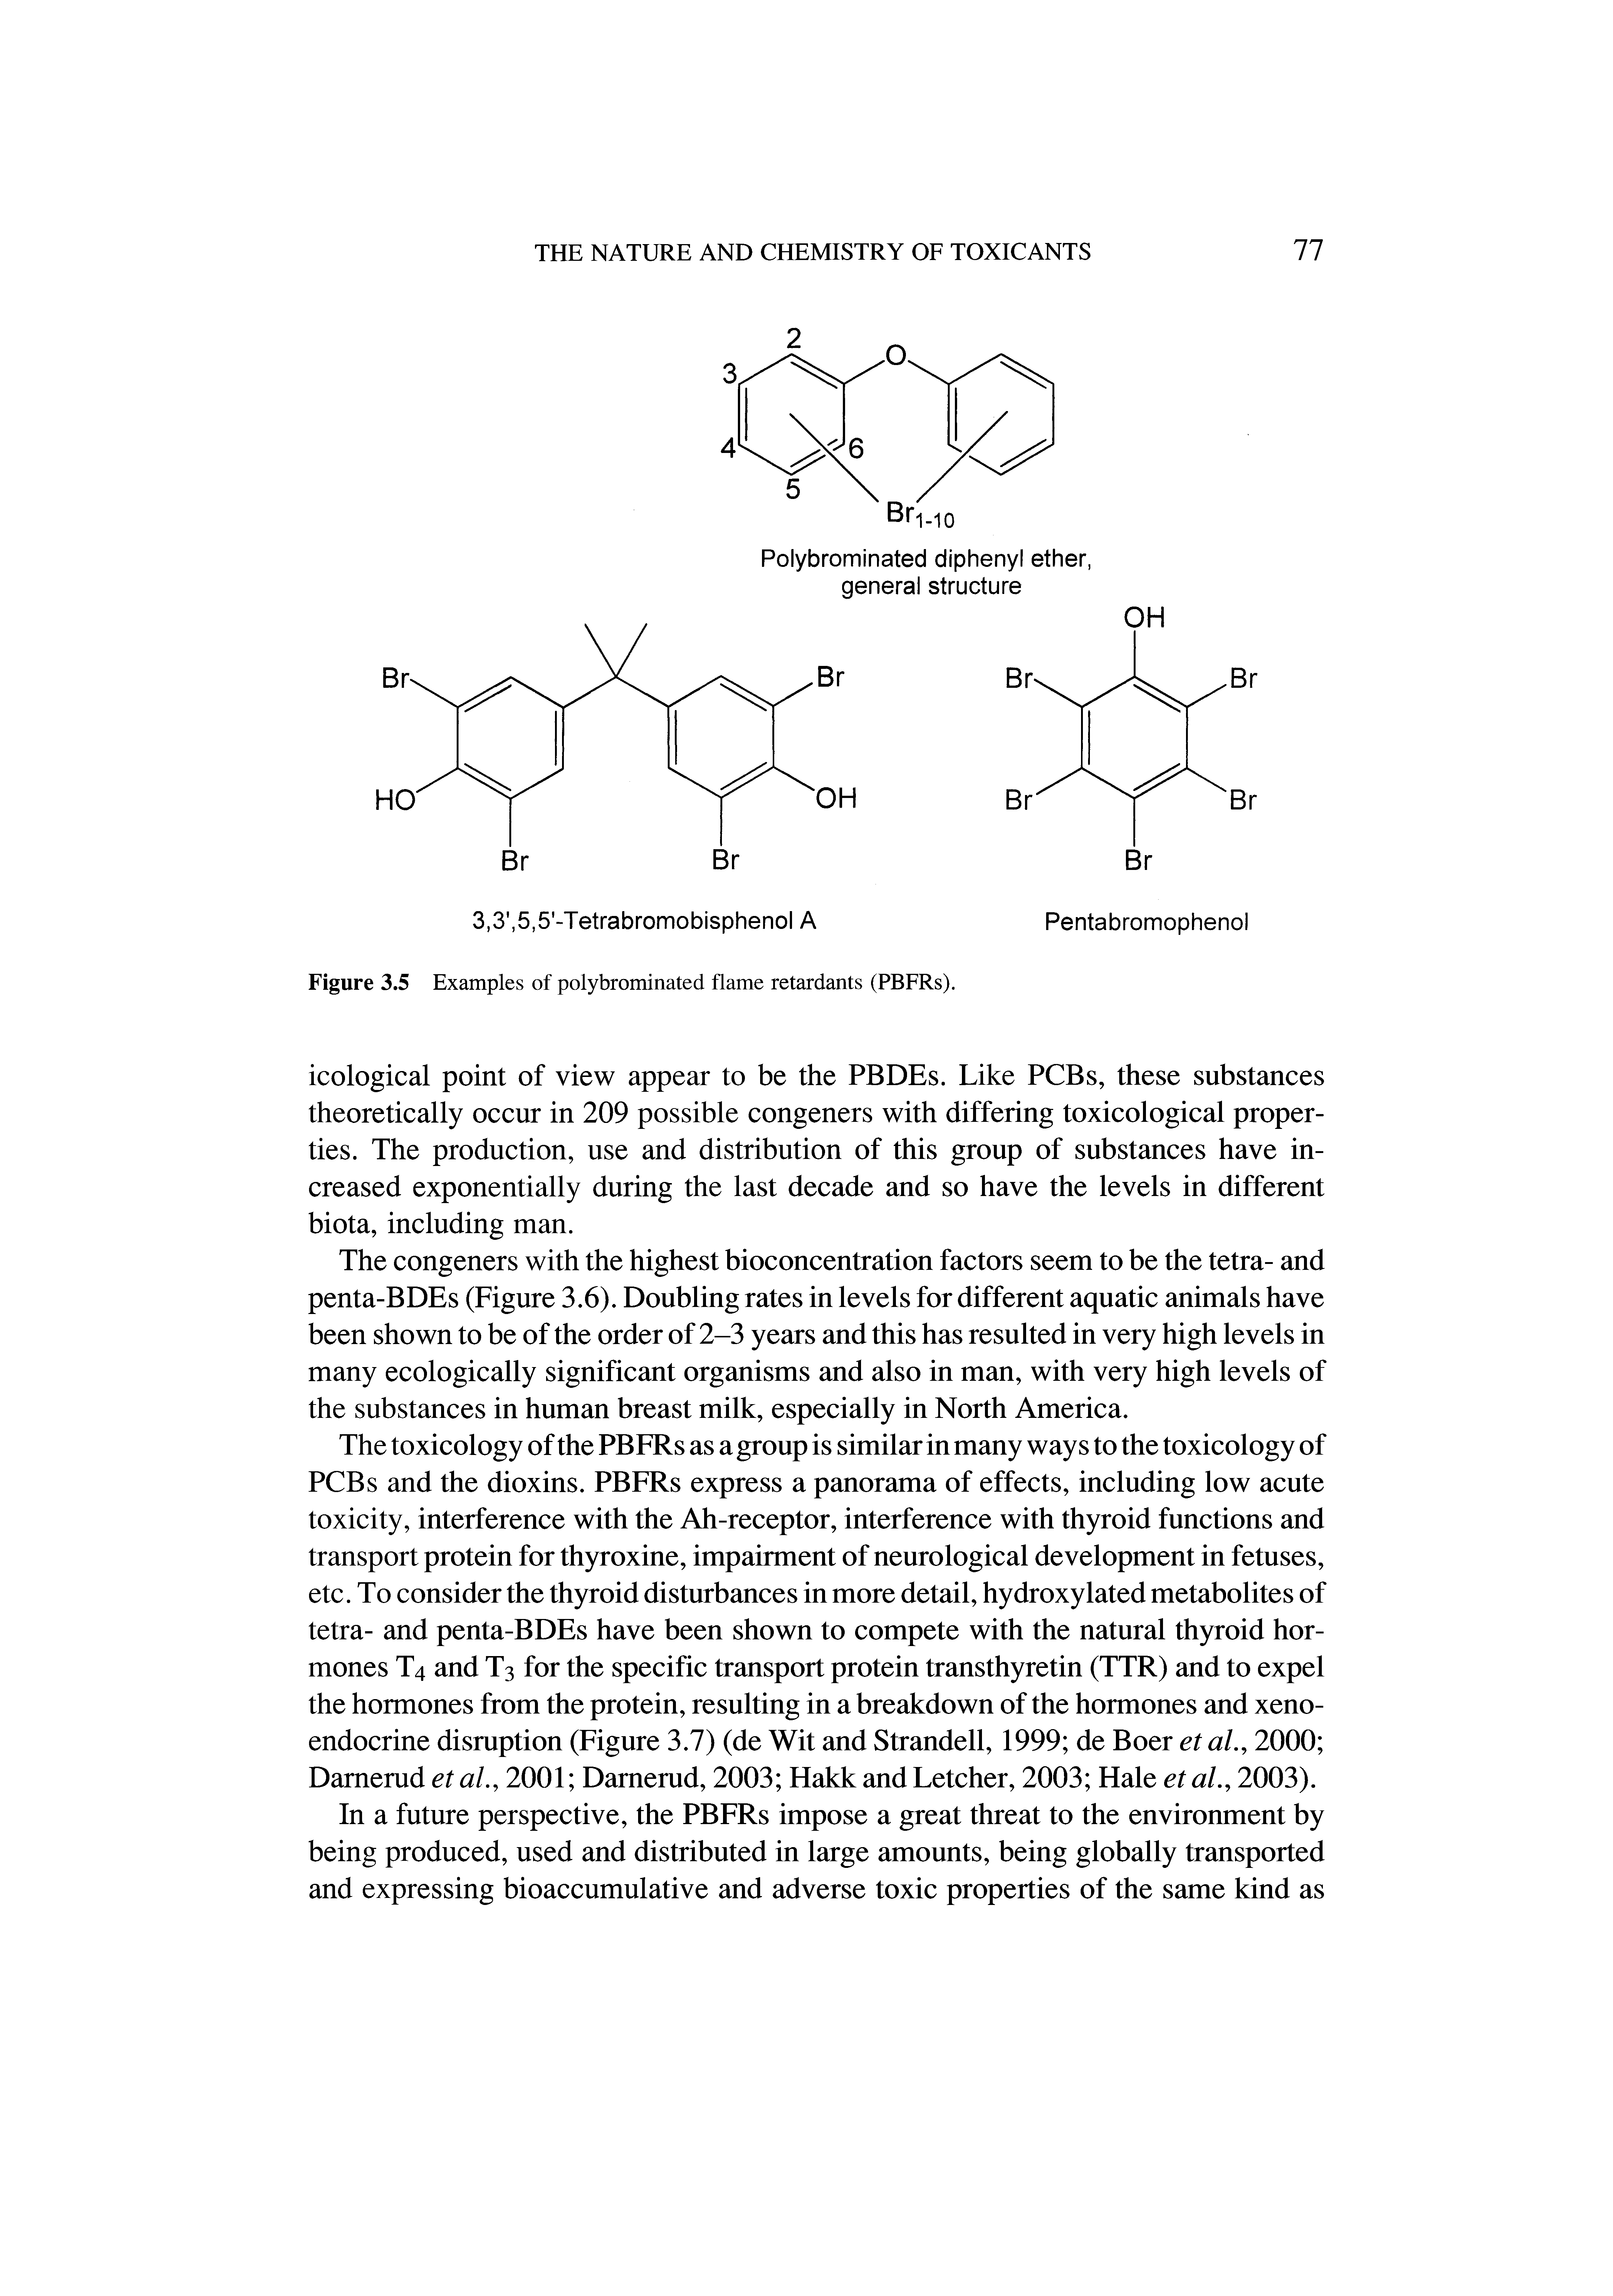 Figure 3.5 Examples of polybrominated flame retardants (PBFRs).